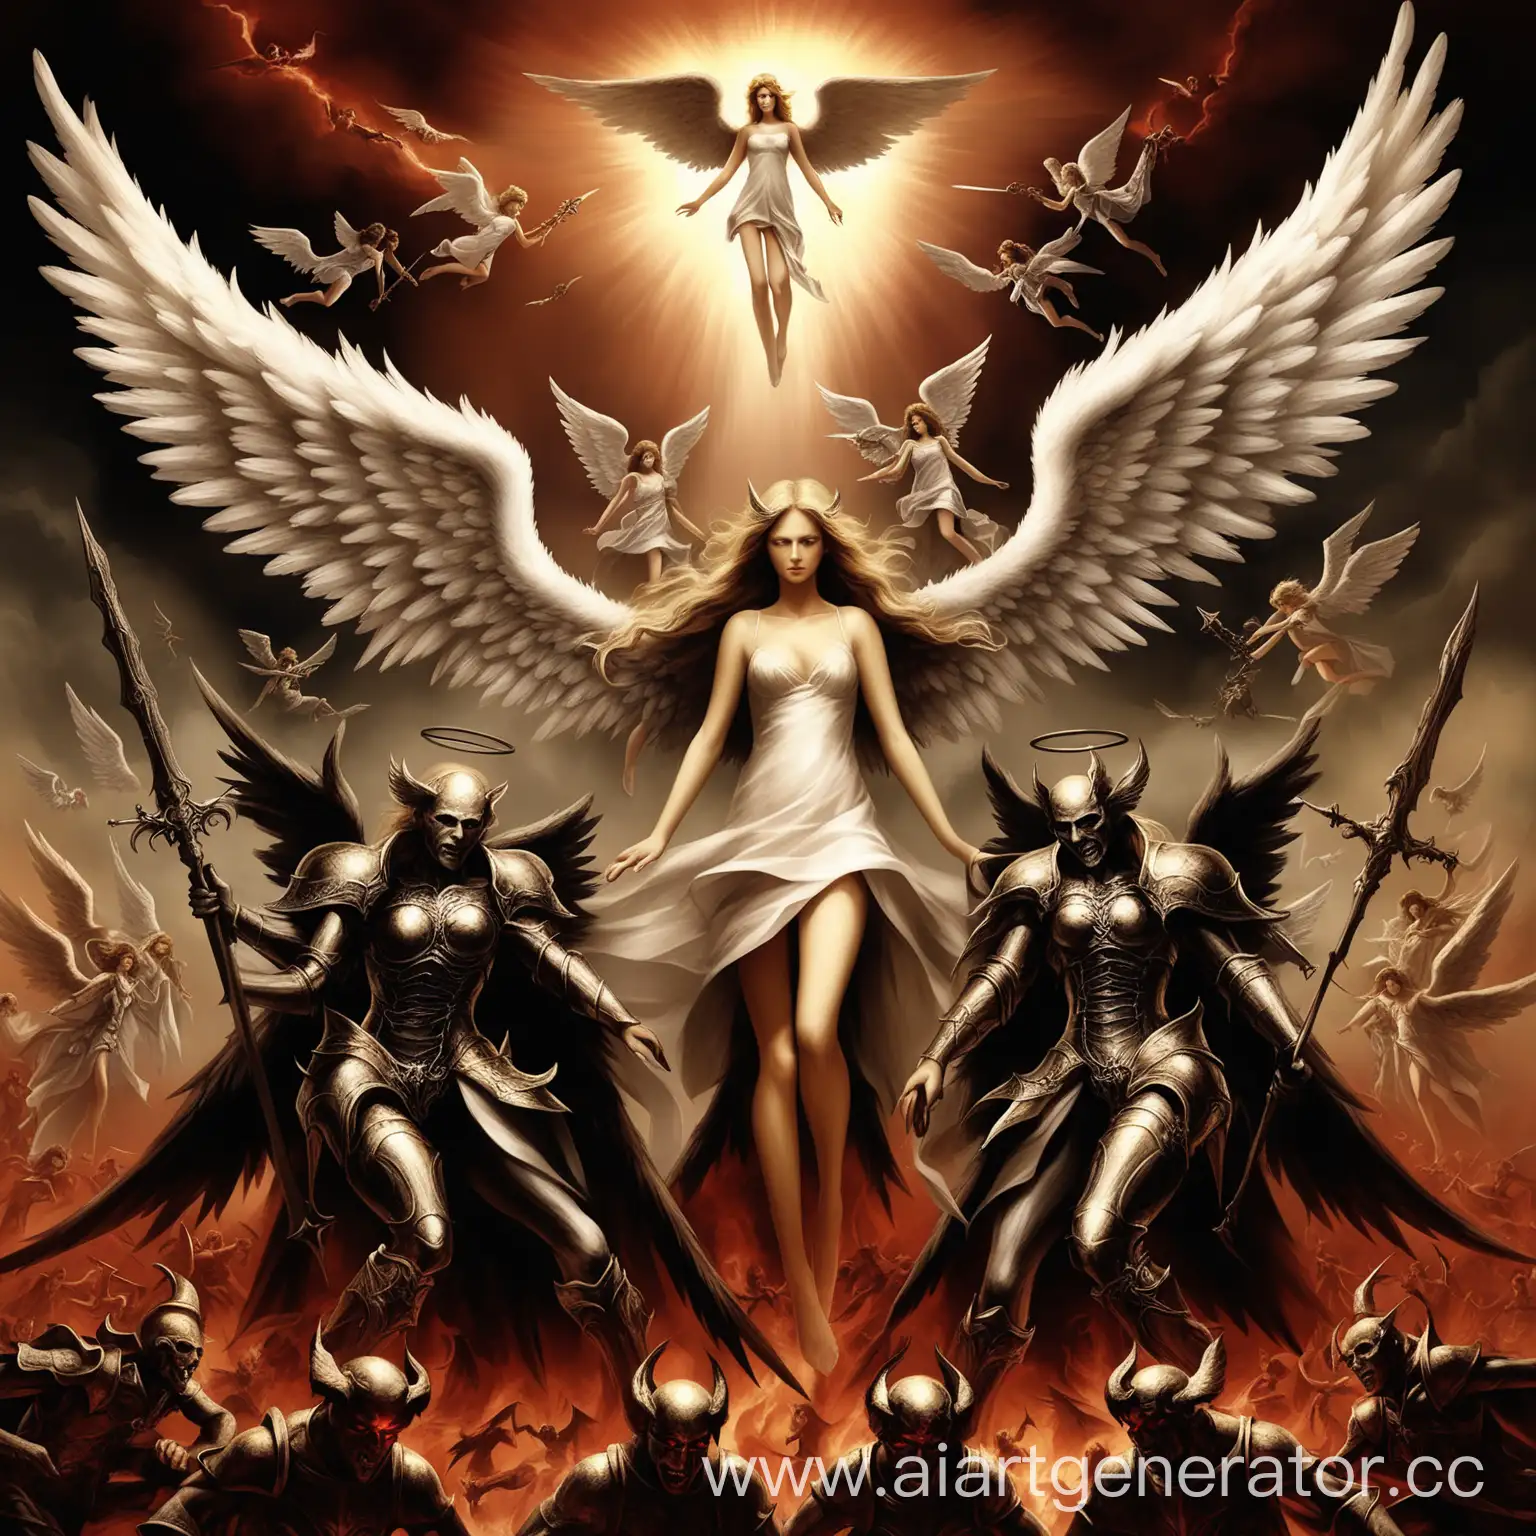 Epic-Battle-Angels-vs-Demons-Clash-in-Celestial-War